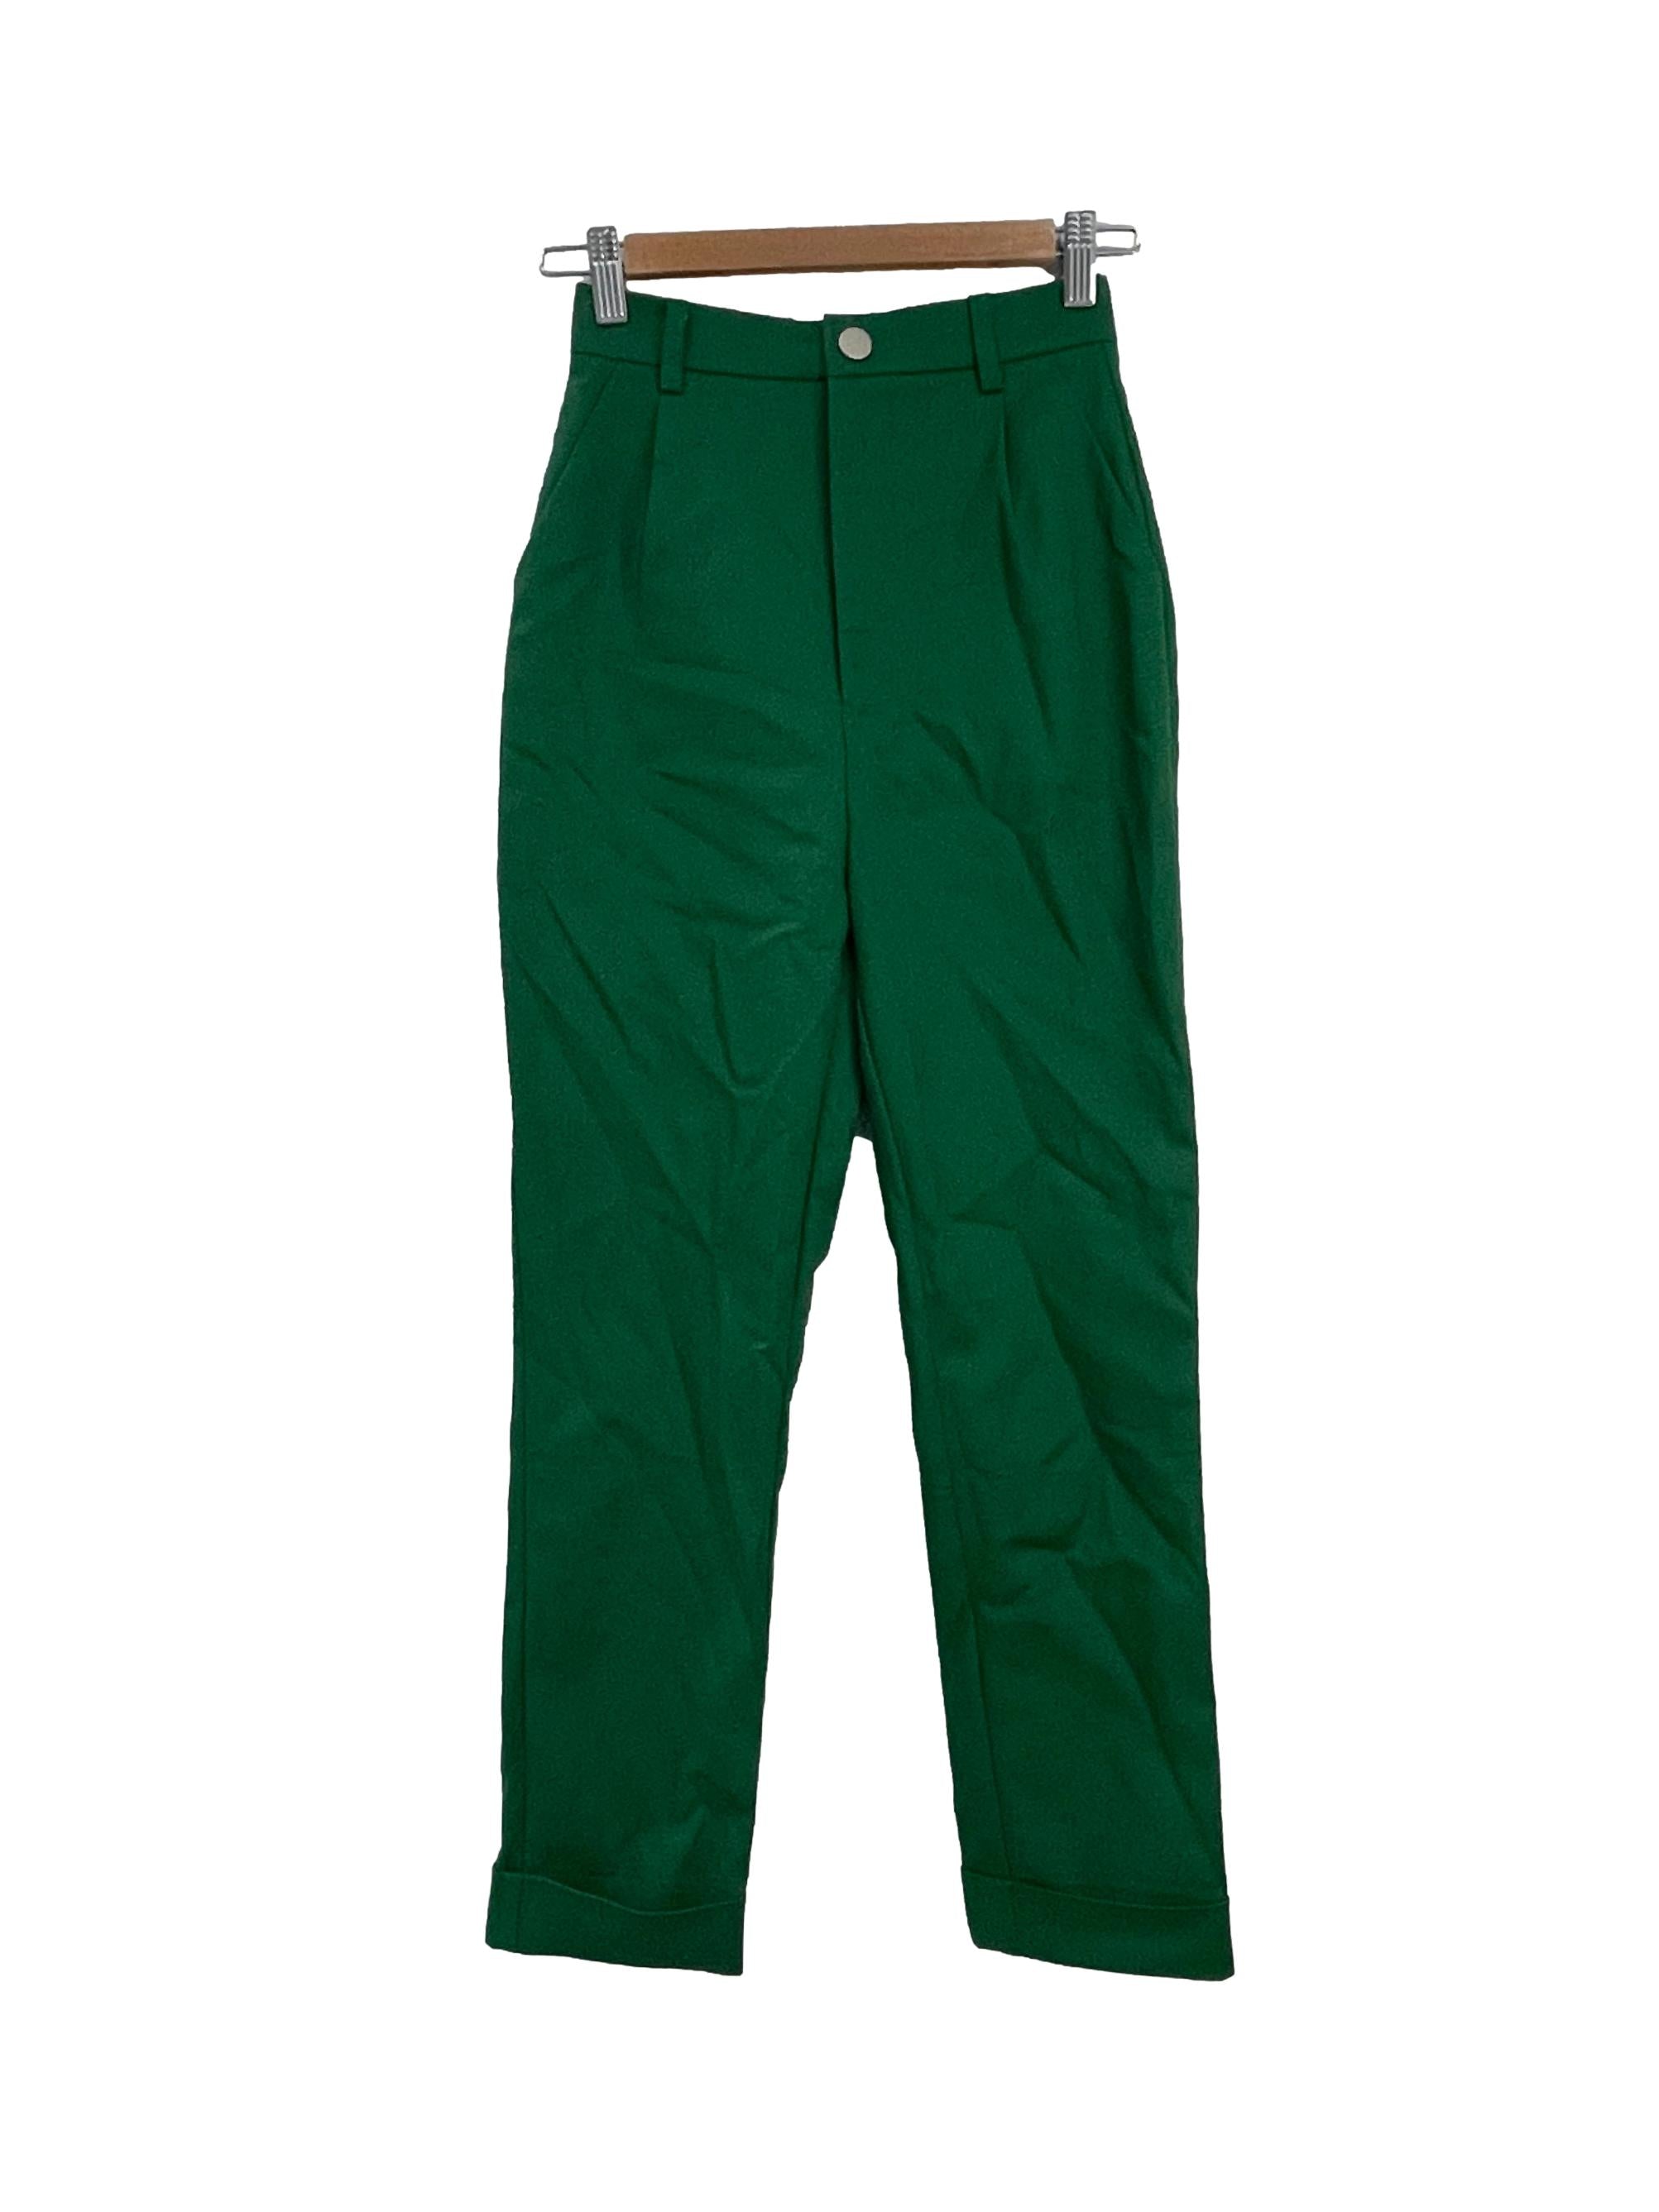 Green High Waist Tapered Cuffed Pants LB